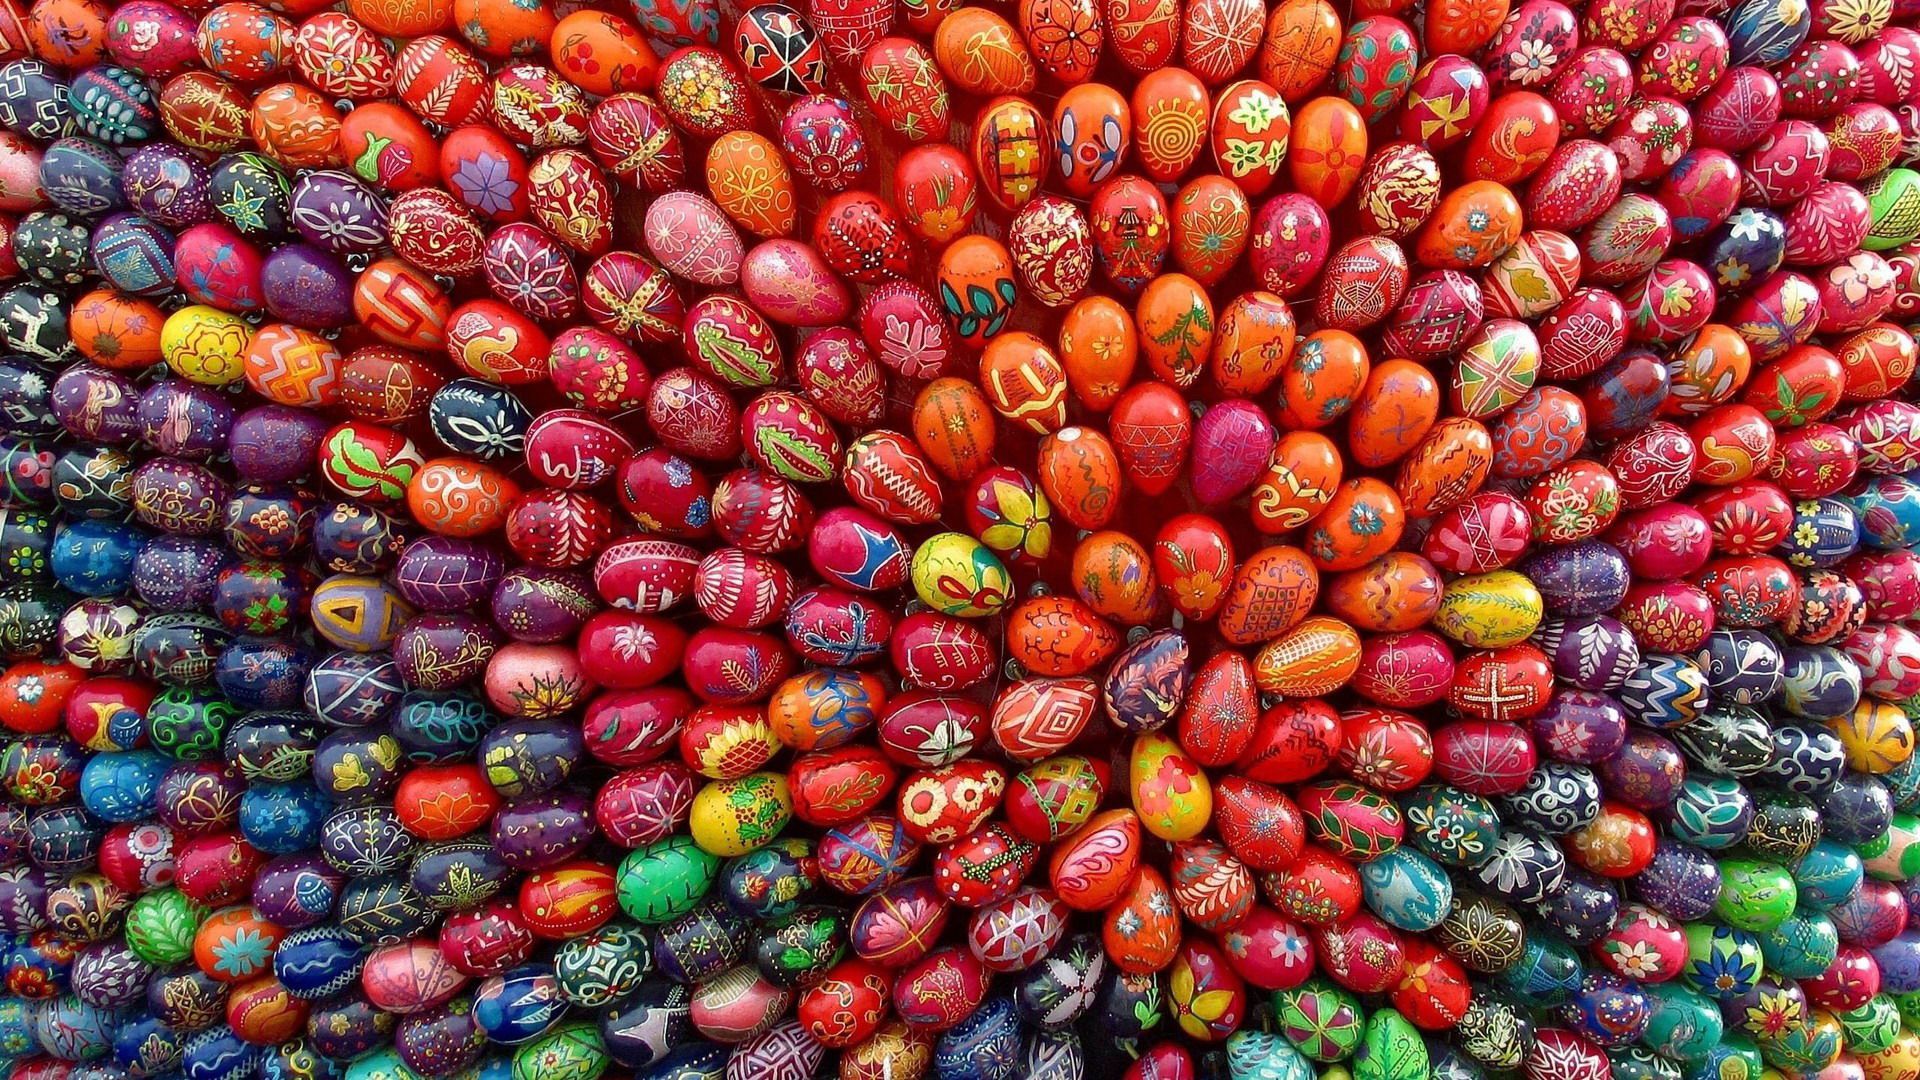 Happy Easter Eggs Wallpaper 1920×1080 Definition Wallpaper. Easter wallpaper, Easter egg designs, Ukrainian easter eggs